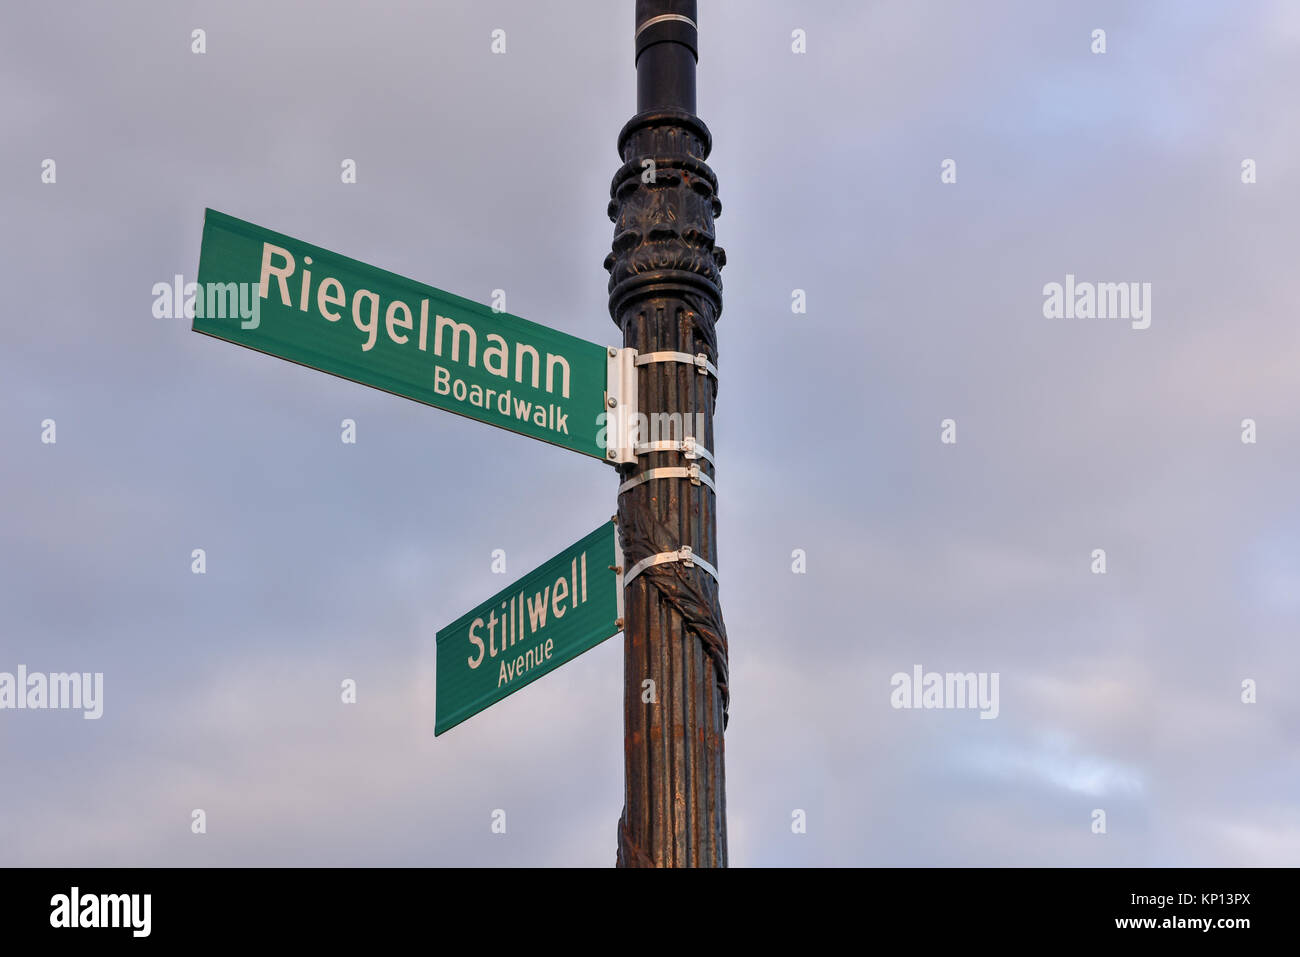 Riegelmann Boardwalk signe sur la plage de Coney Island, Brooklyn, New York Banque D'Images